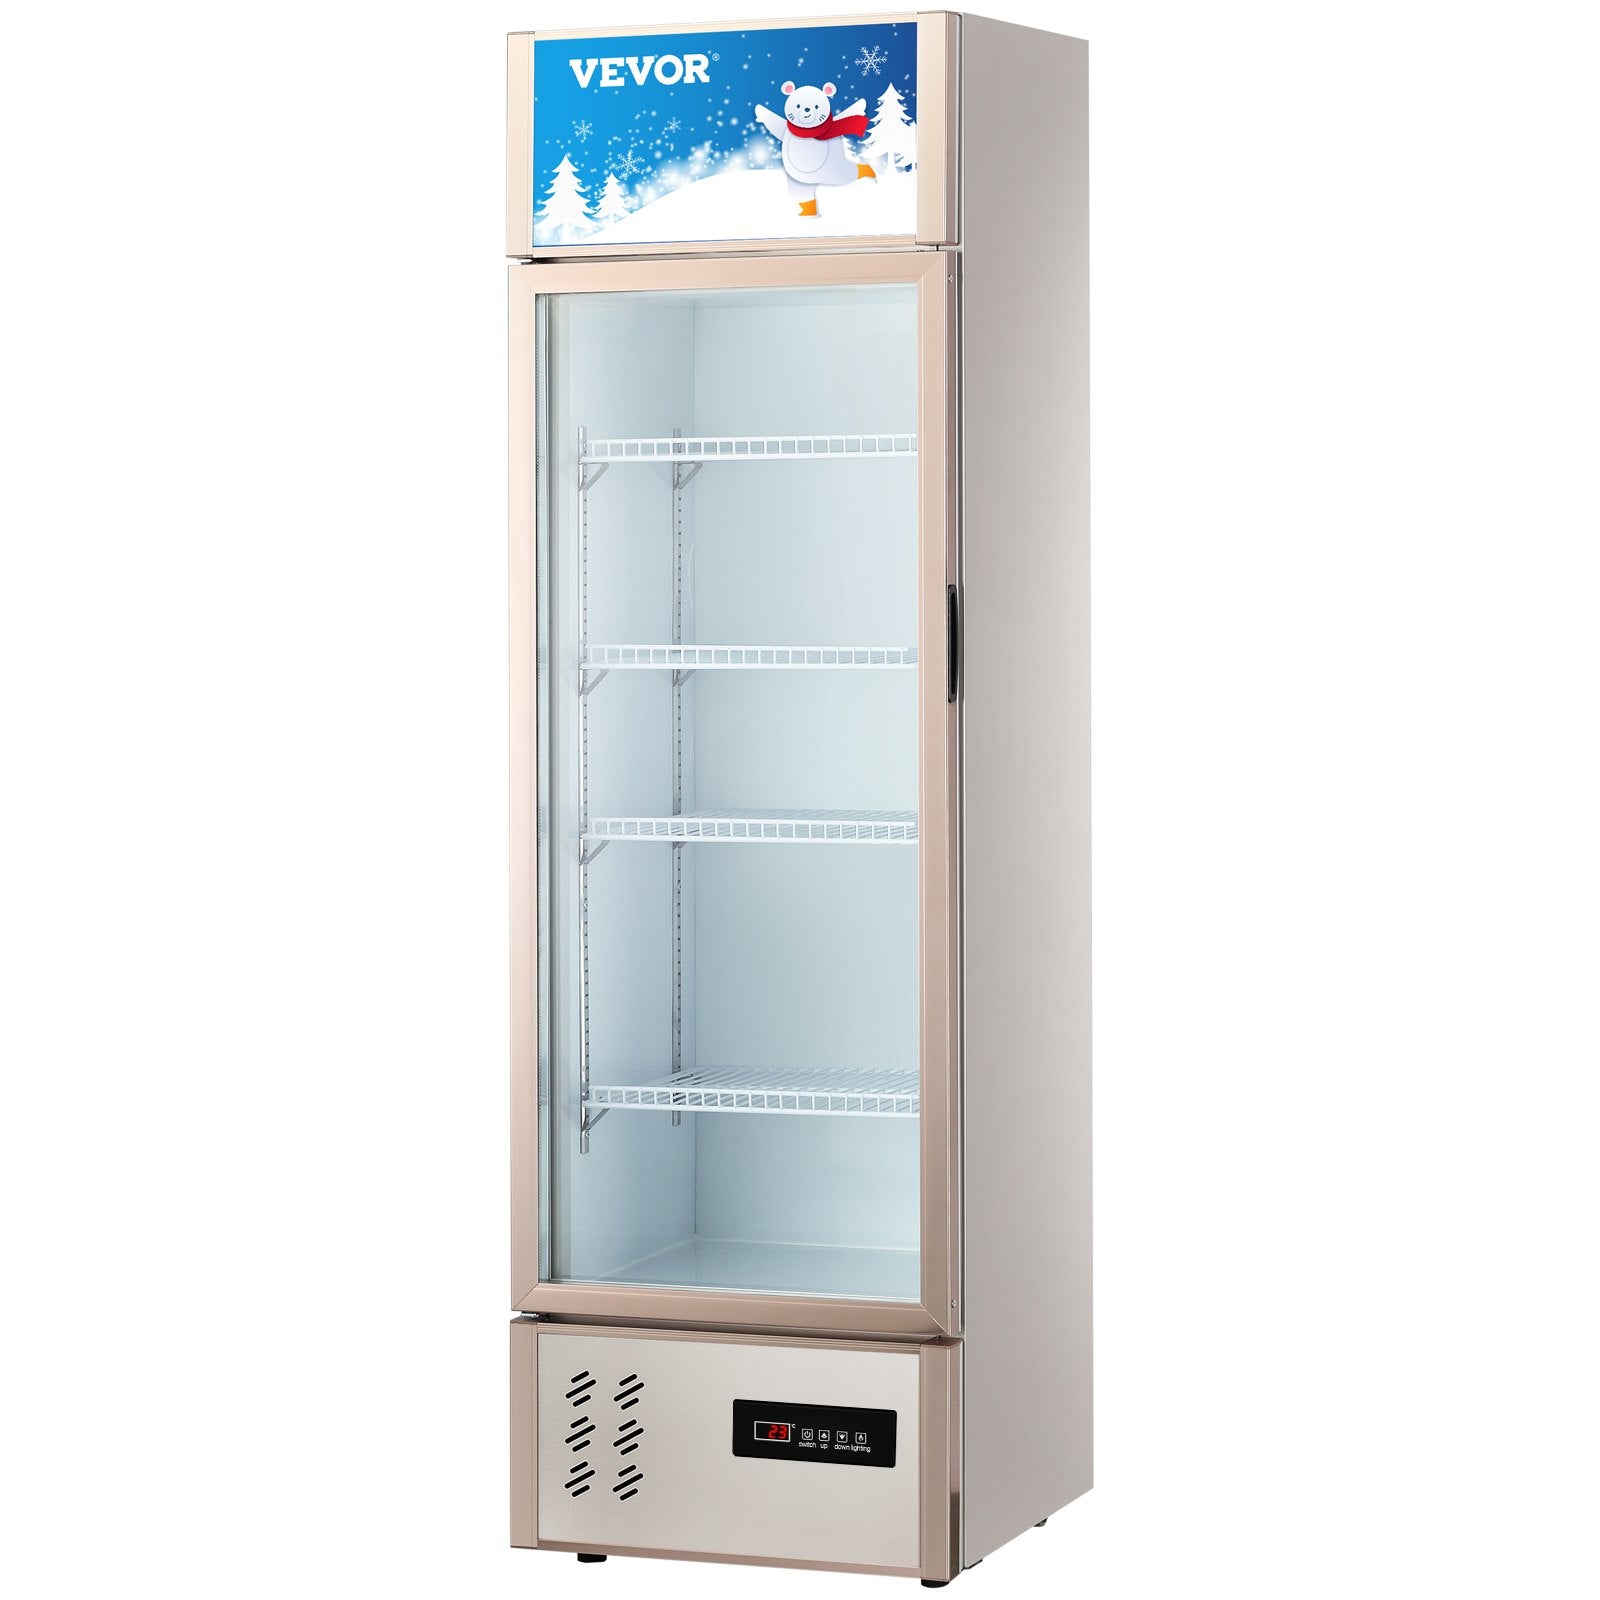 VEVOR Commercial Refrigerator,Display Fridge Upright Beverage Cooler, Glass Door with LED Light for Home, Store, Gym or Office, (8 cu.ft. Single Swing Door)